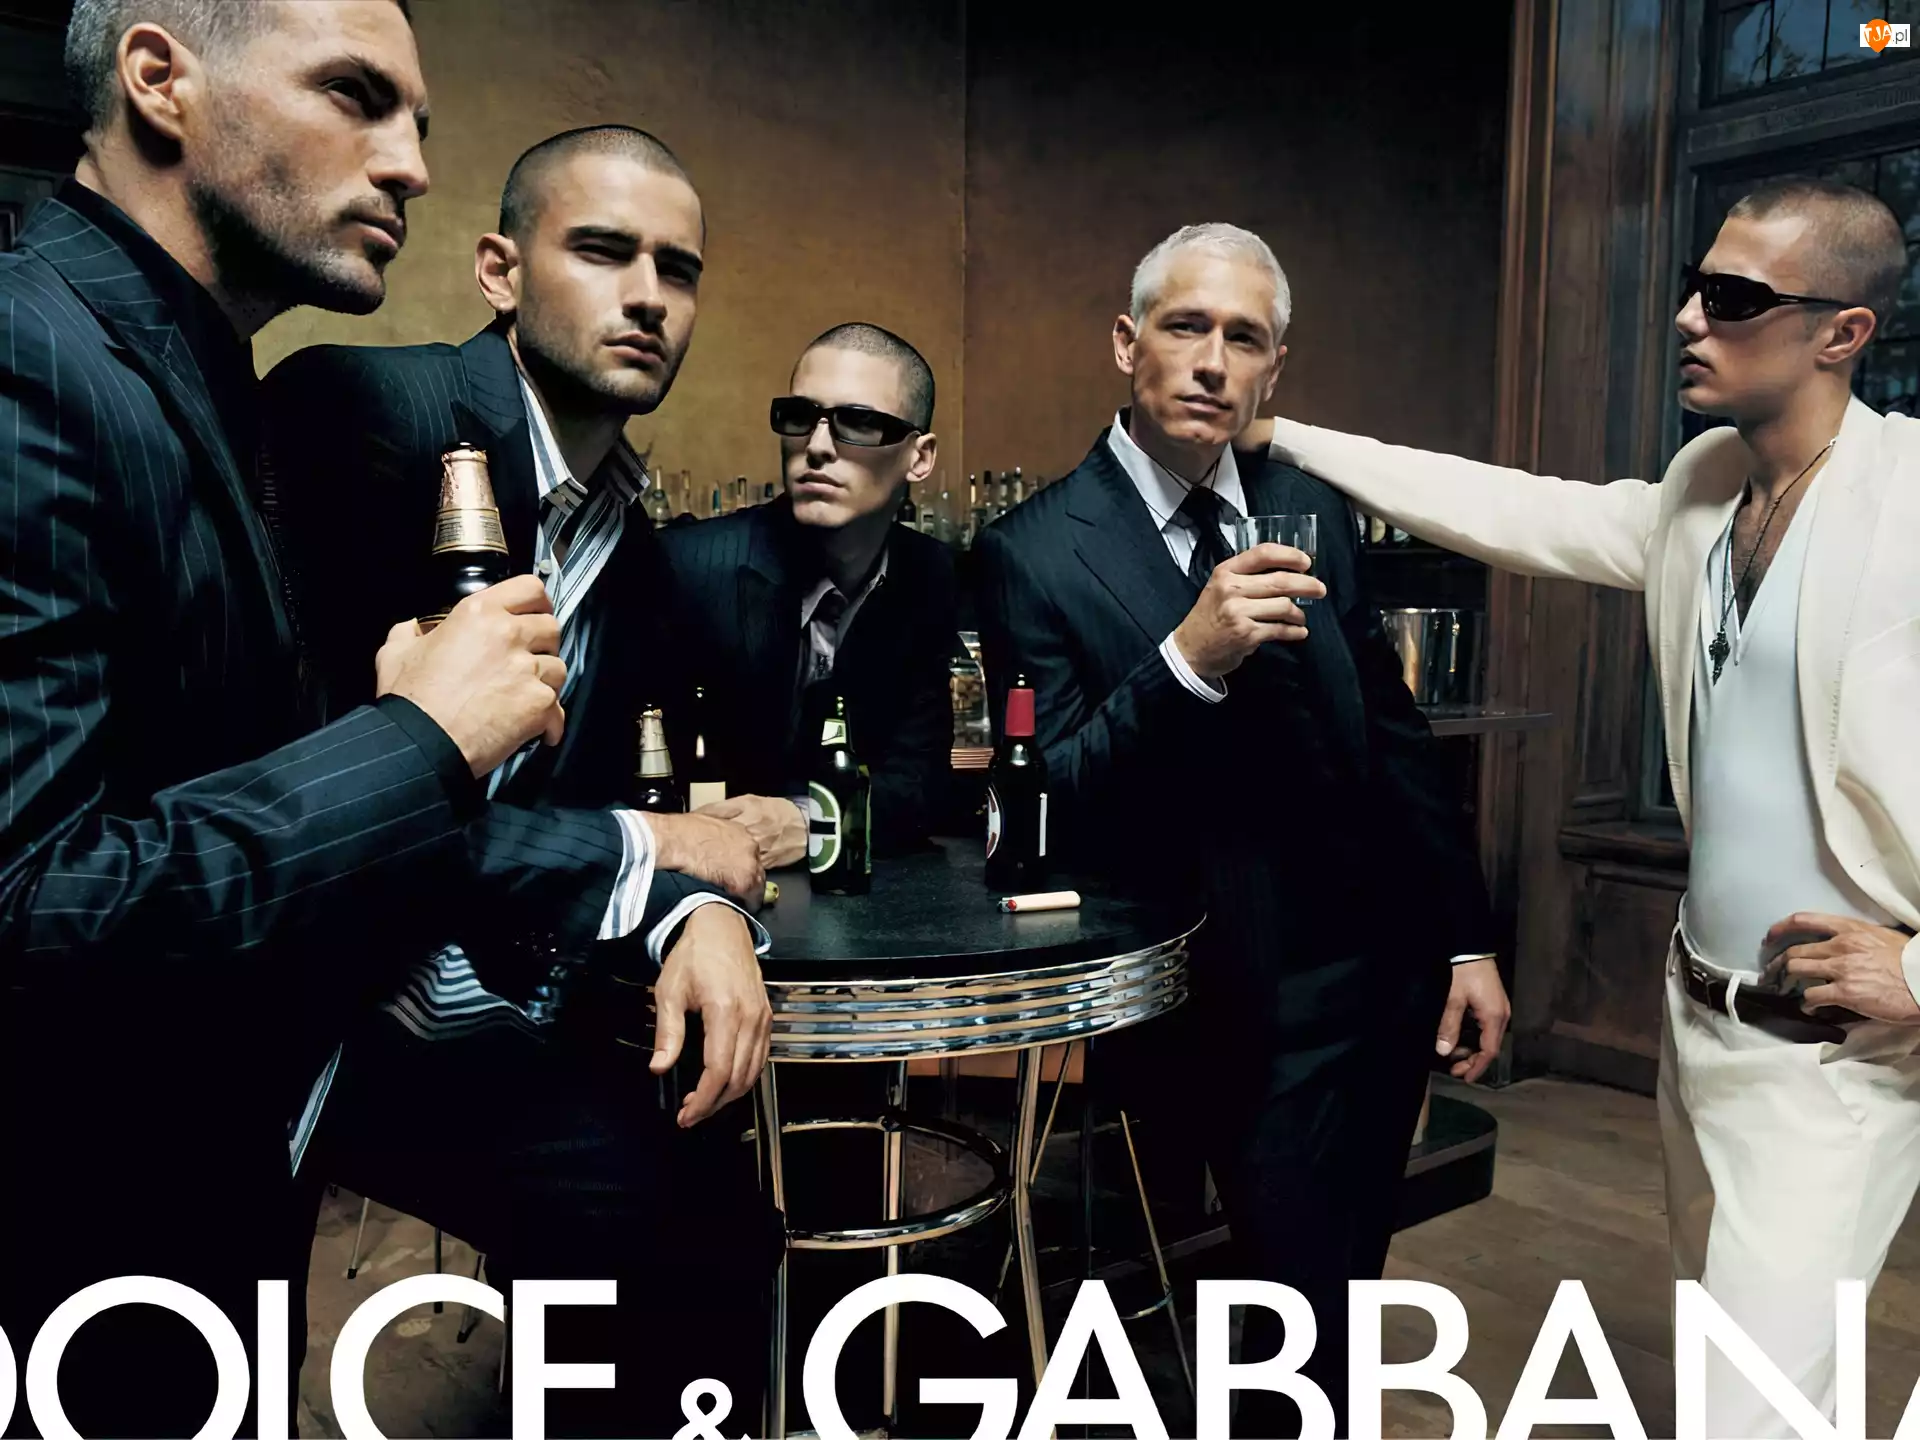 garnitur, butelki, mężczyźni, Dolce And Gabbana, krawat